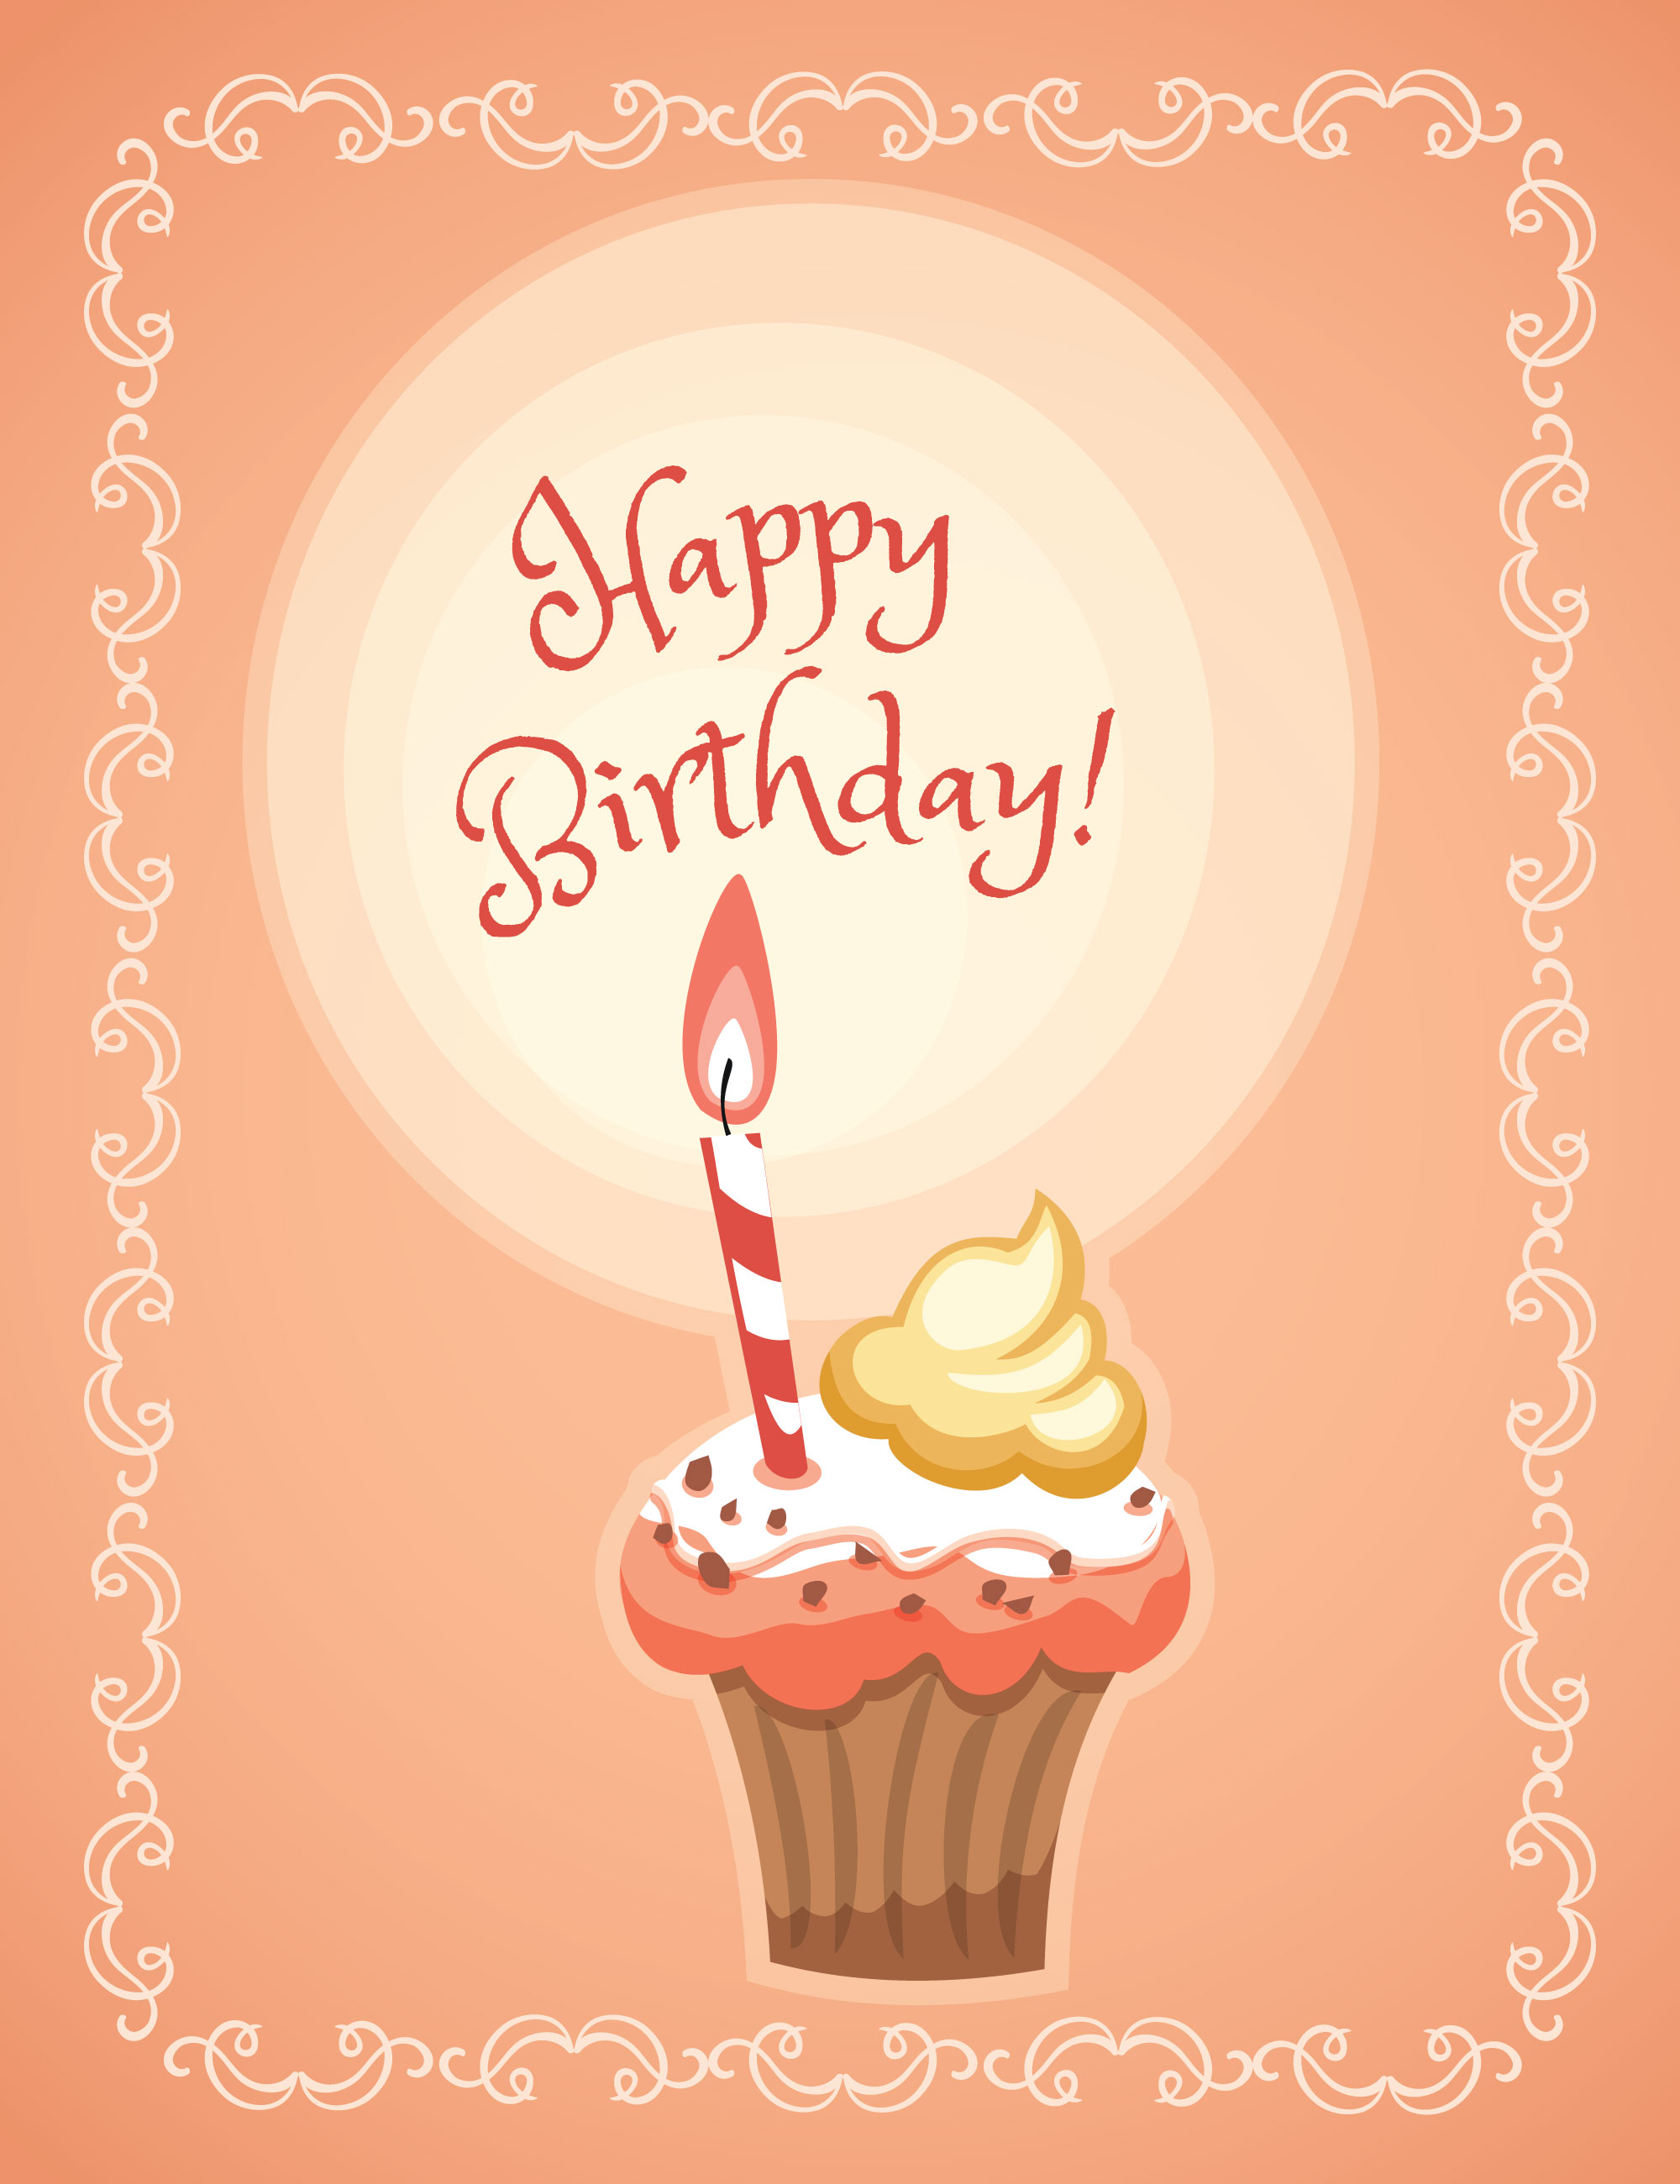 Happy Birthday illustration with cakes Photoshop brush